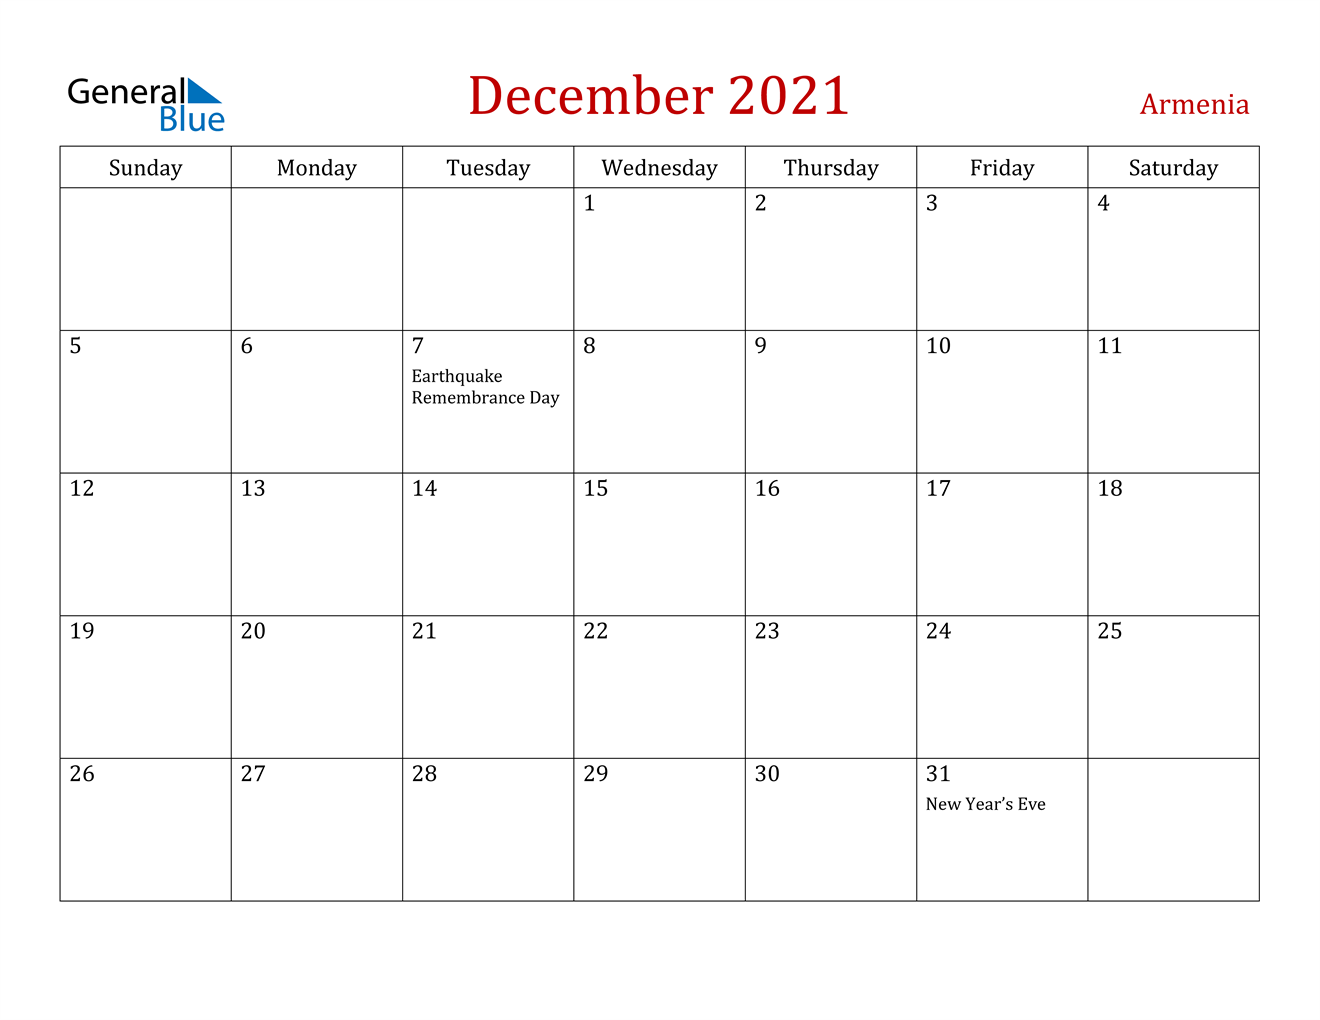 December 2021 Calendar - Armenia